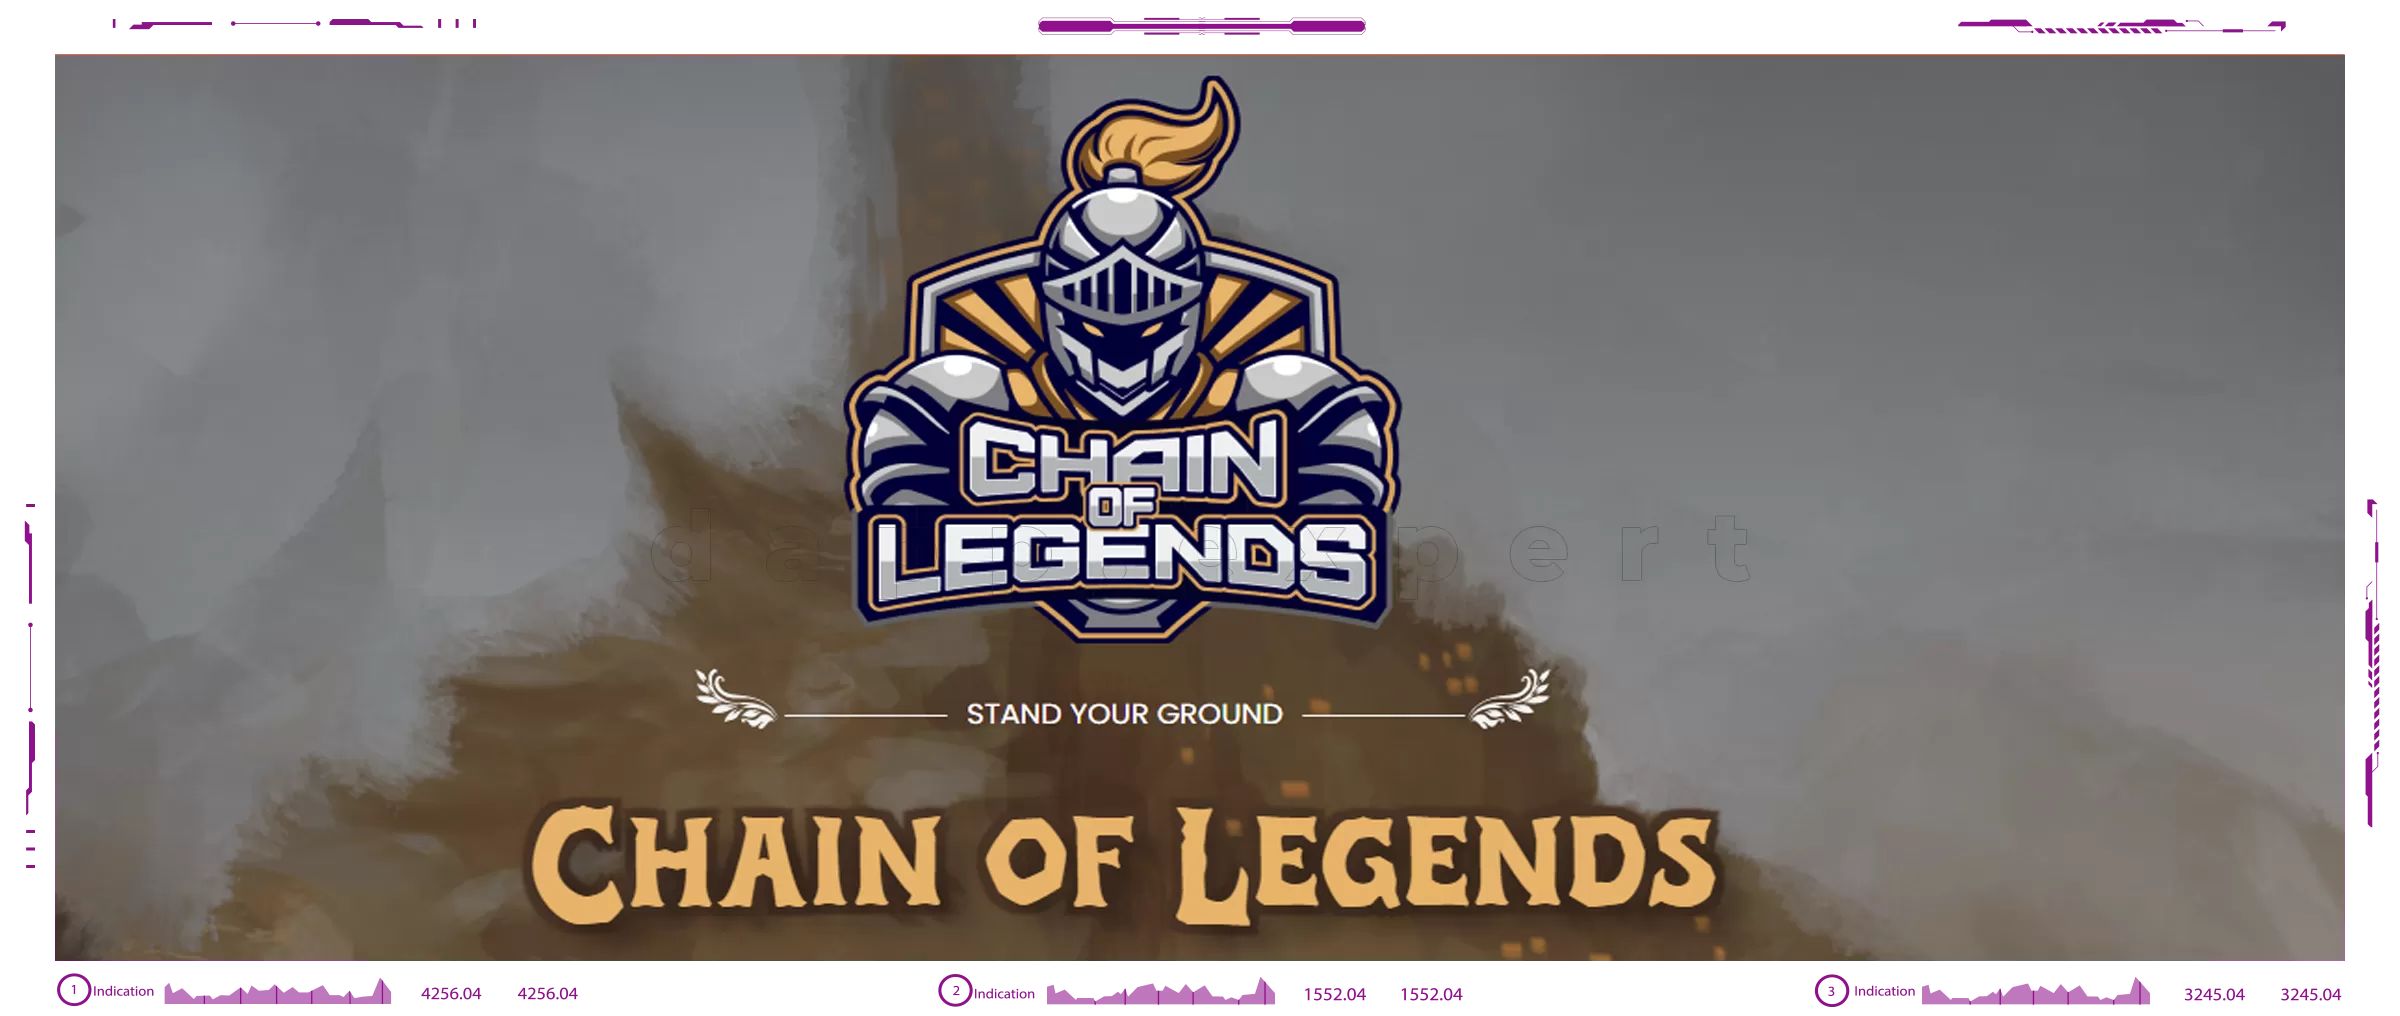 Dapp Chain of Legends